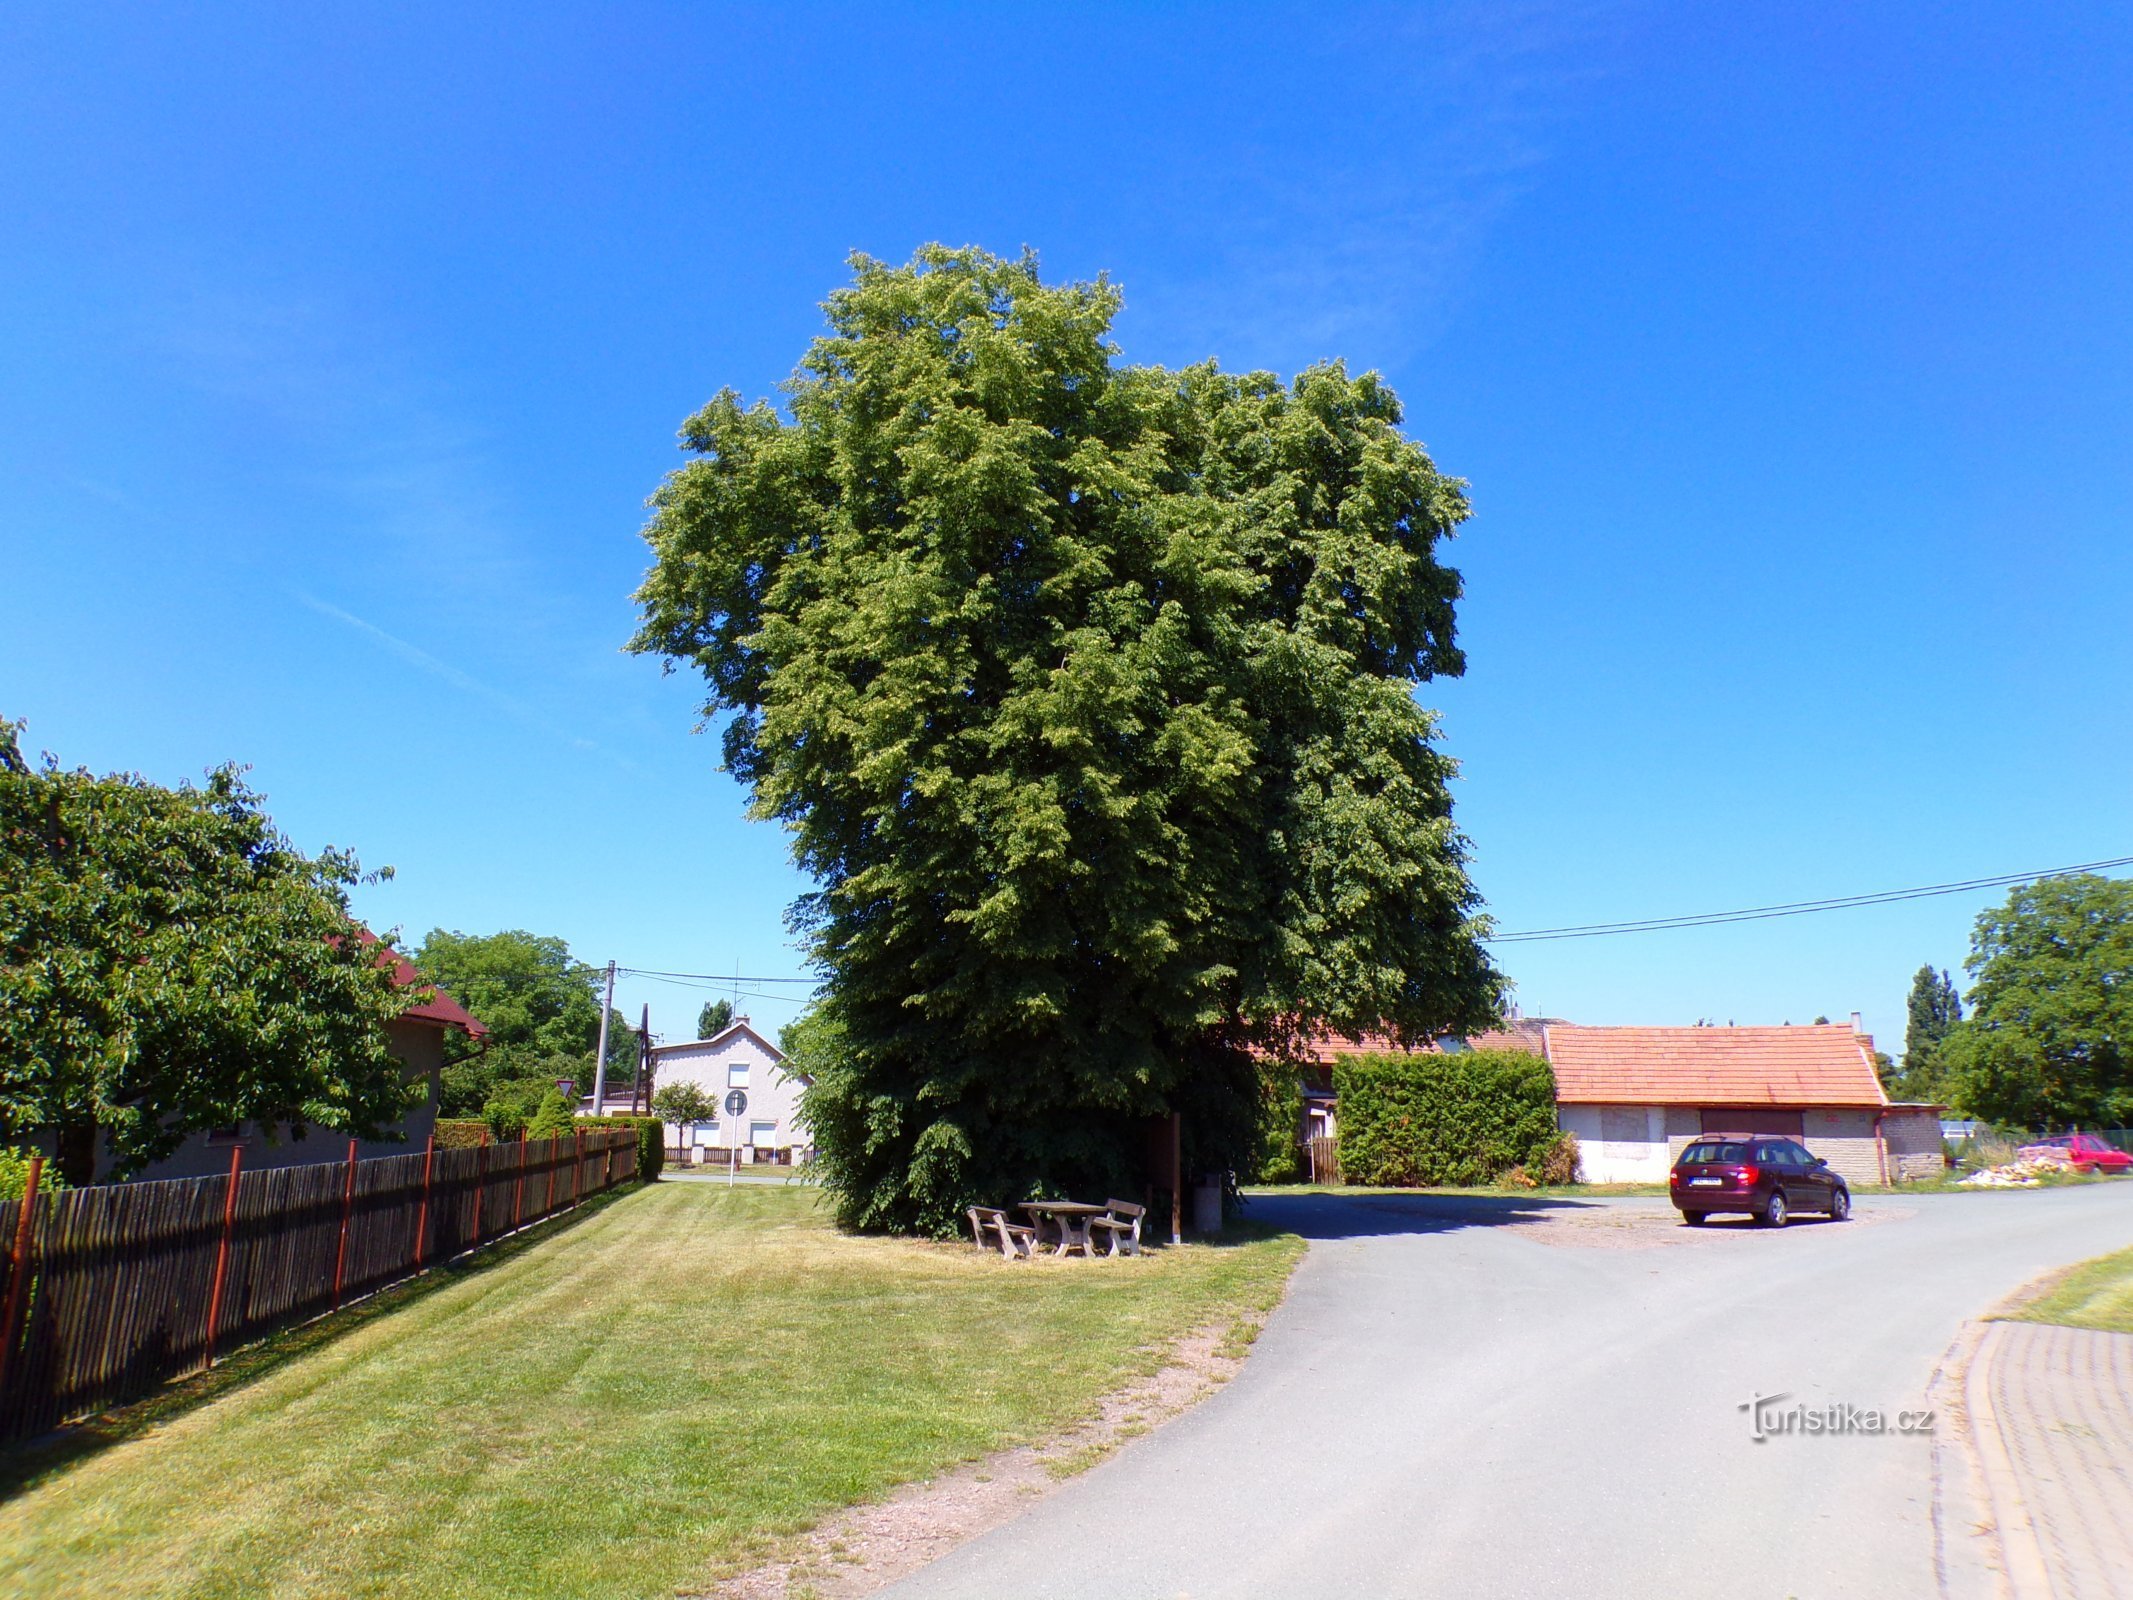 Limetræer nær Kuklin-korset (Dobřenice, 15.6.2022/XNUMX/XNUMX)